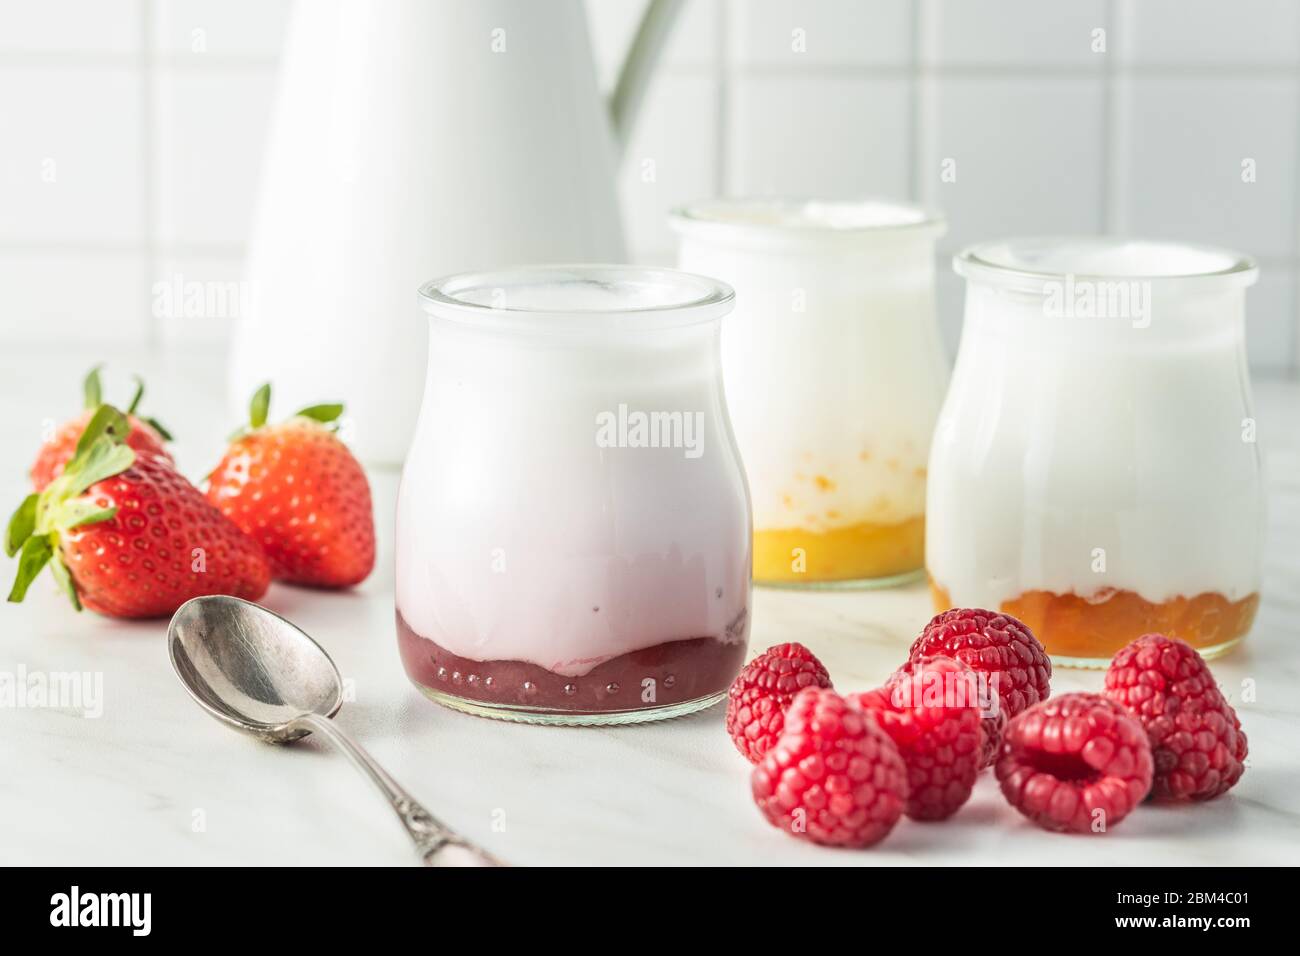 https://c8.alamy.com/comp/2BM4C01/white-fruity-yogurt-in-jar-and-raspberries-on-white-table-2BM4C01.jpg